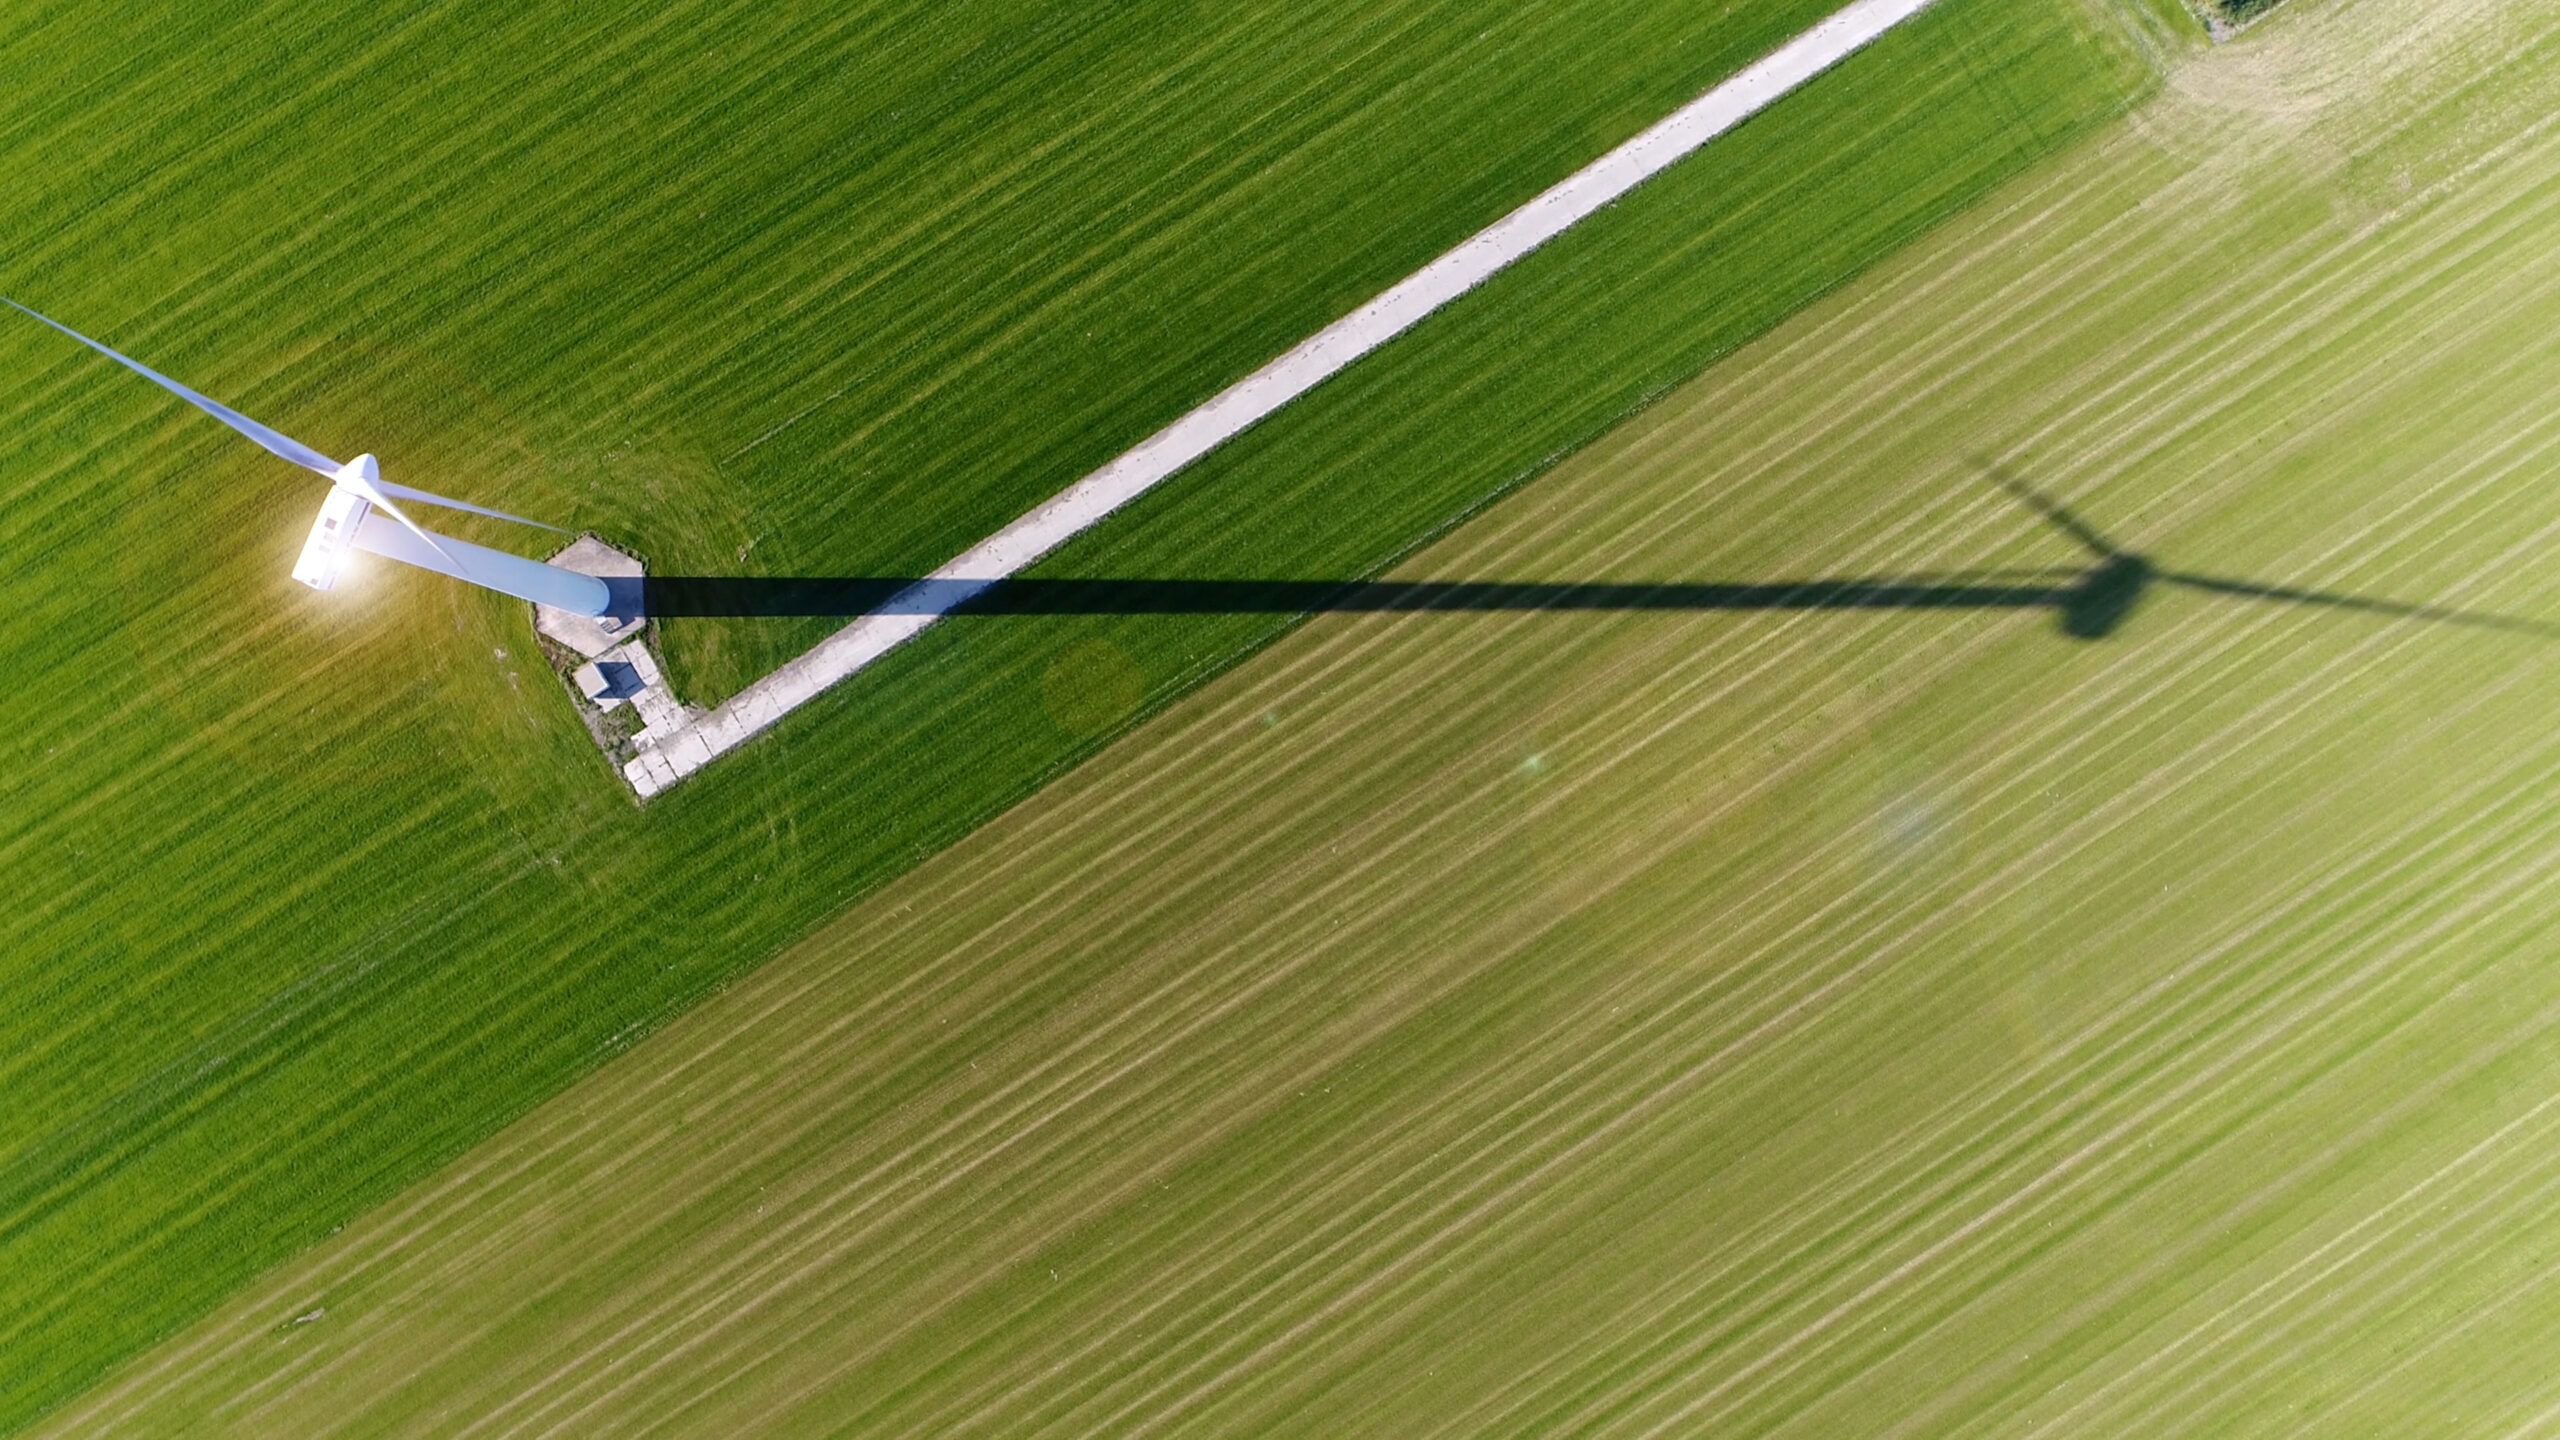 Aerial view of a wind turbine casting a long shadow on a piece of farmland